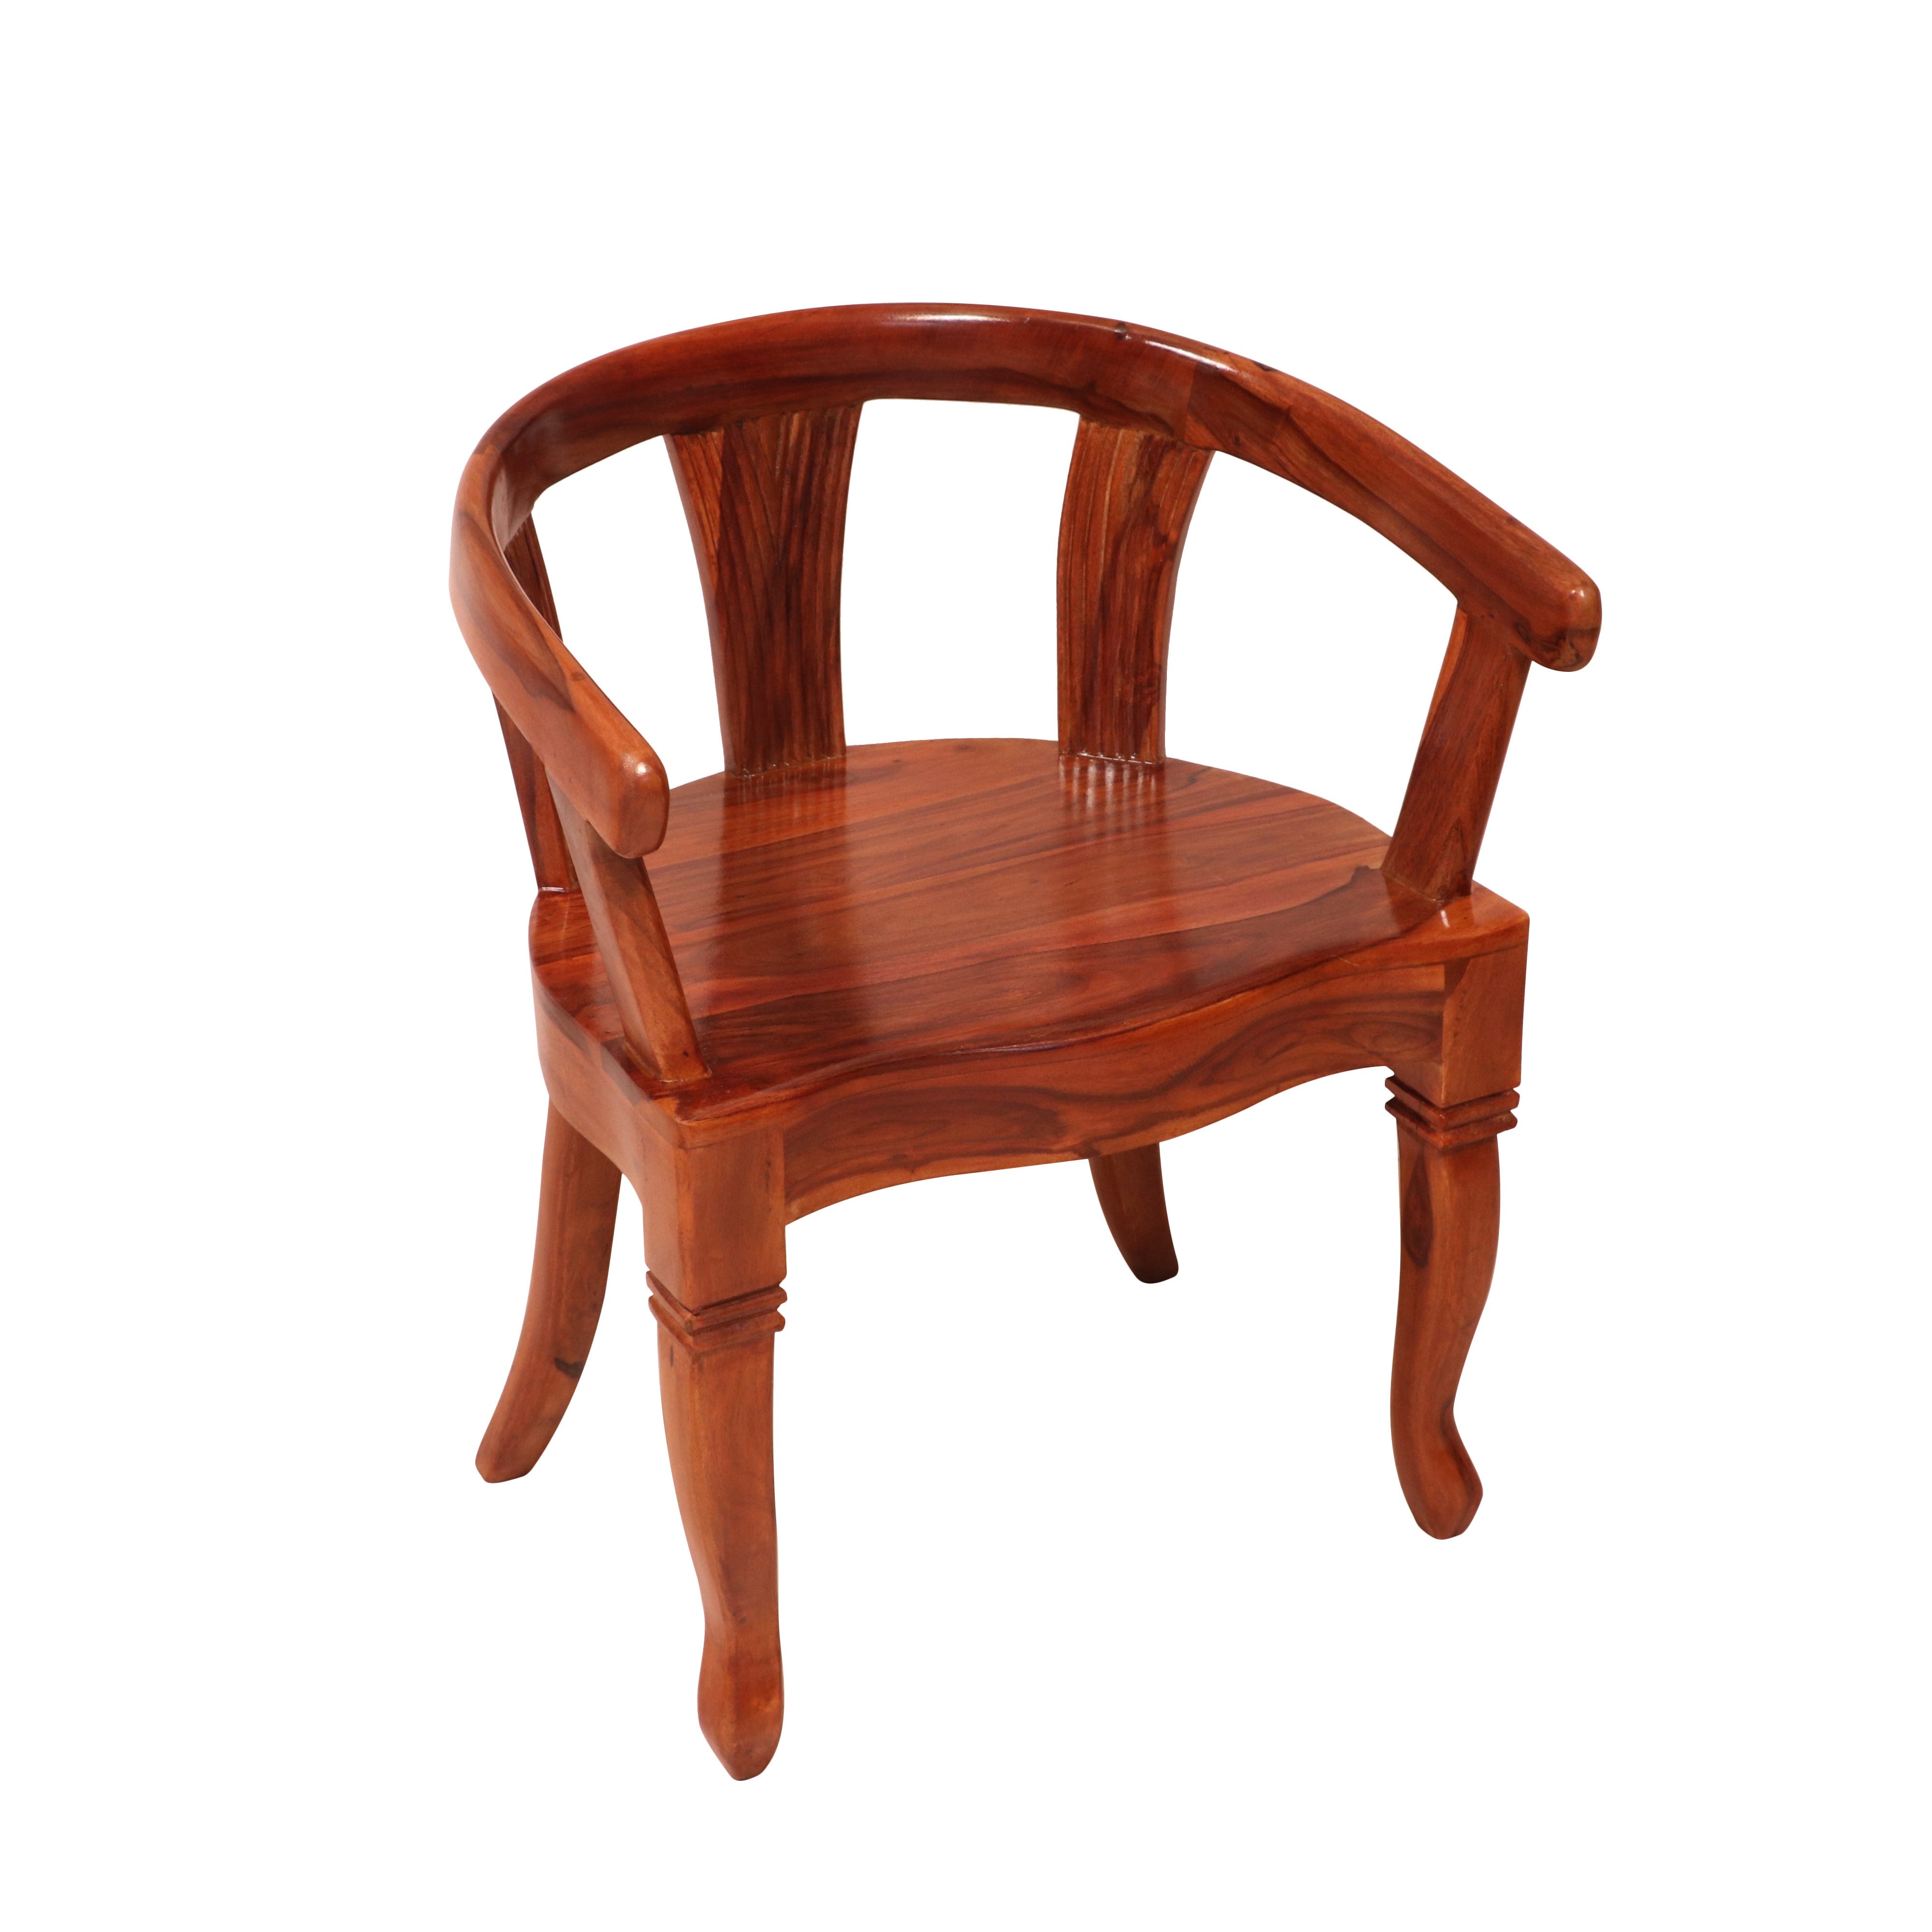 Teak polish Rounded Arms sheesham wood Chair Arm Chair